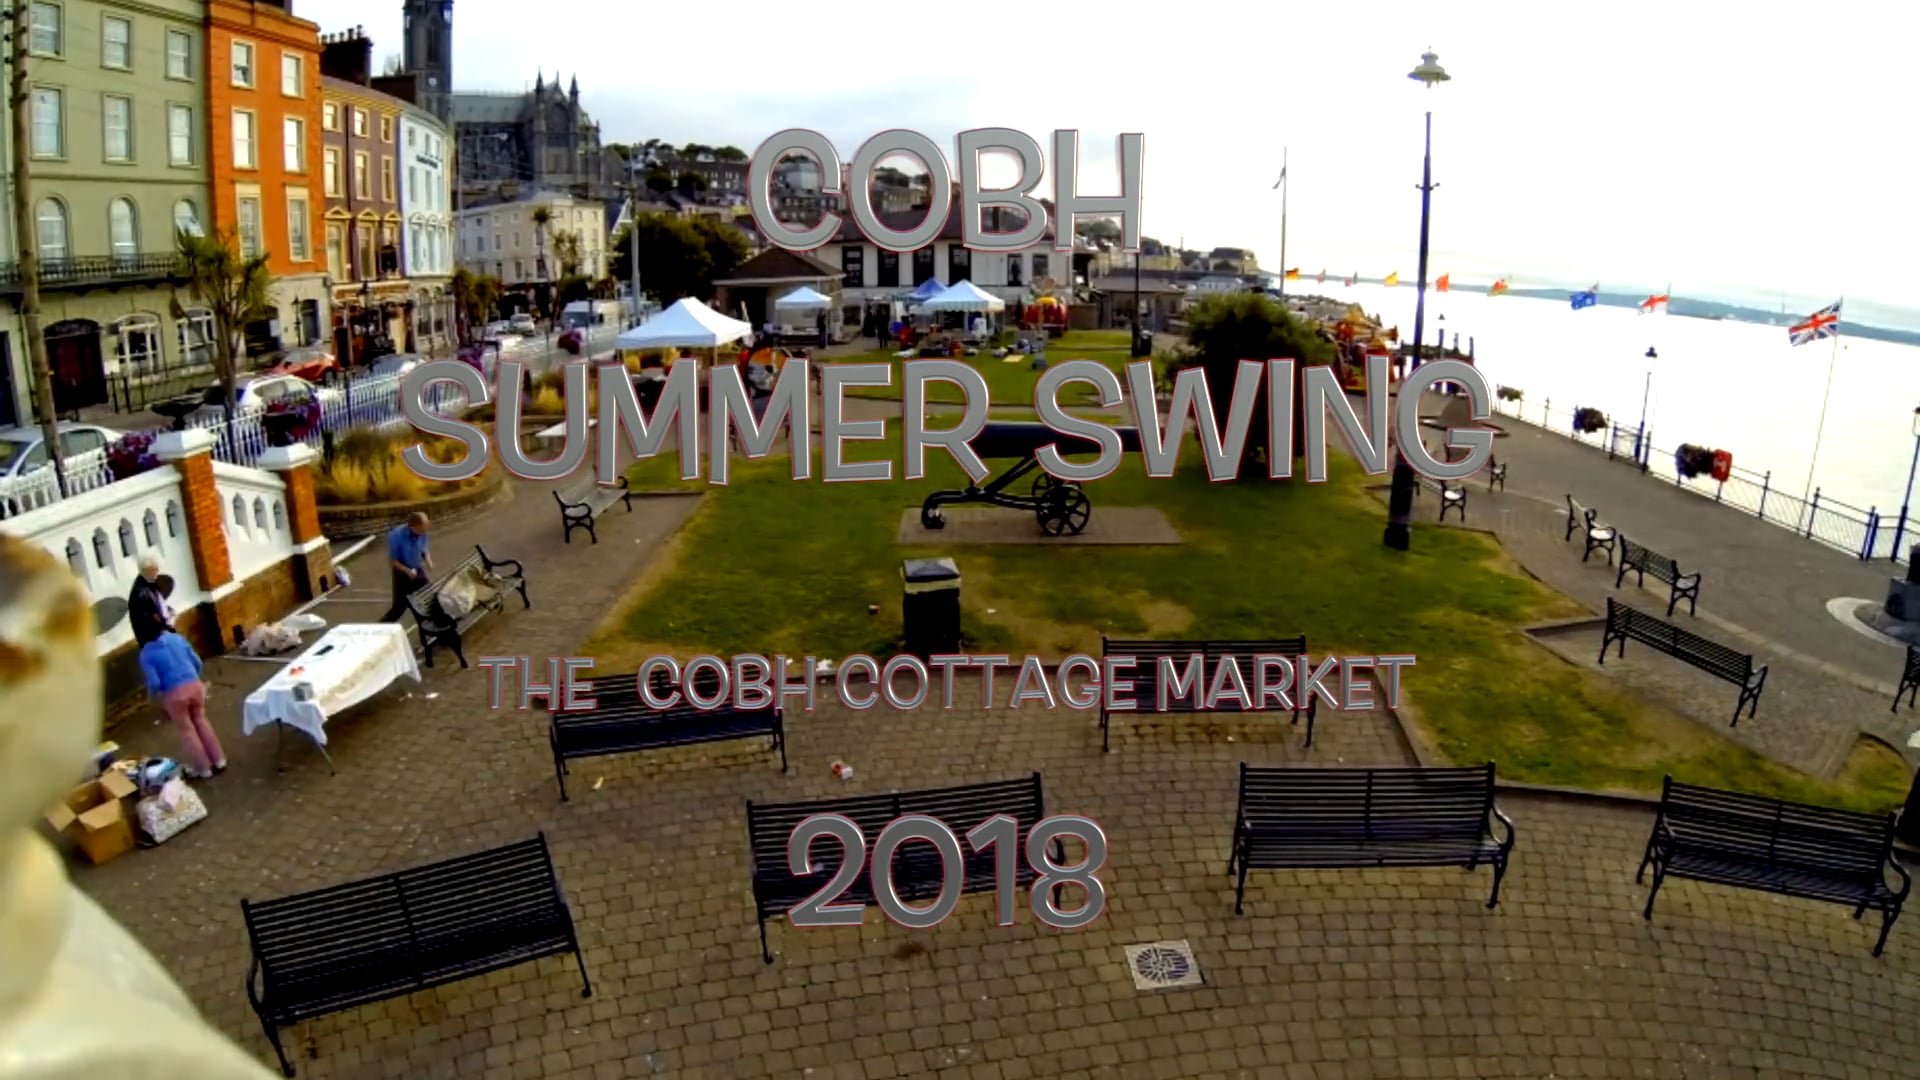 Cobh Summer Swing 2018